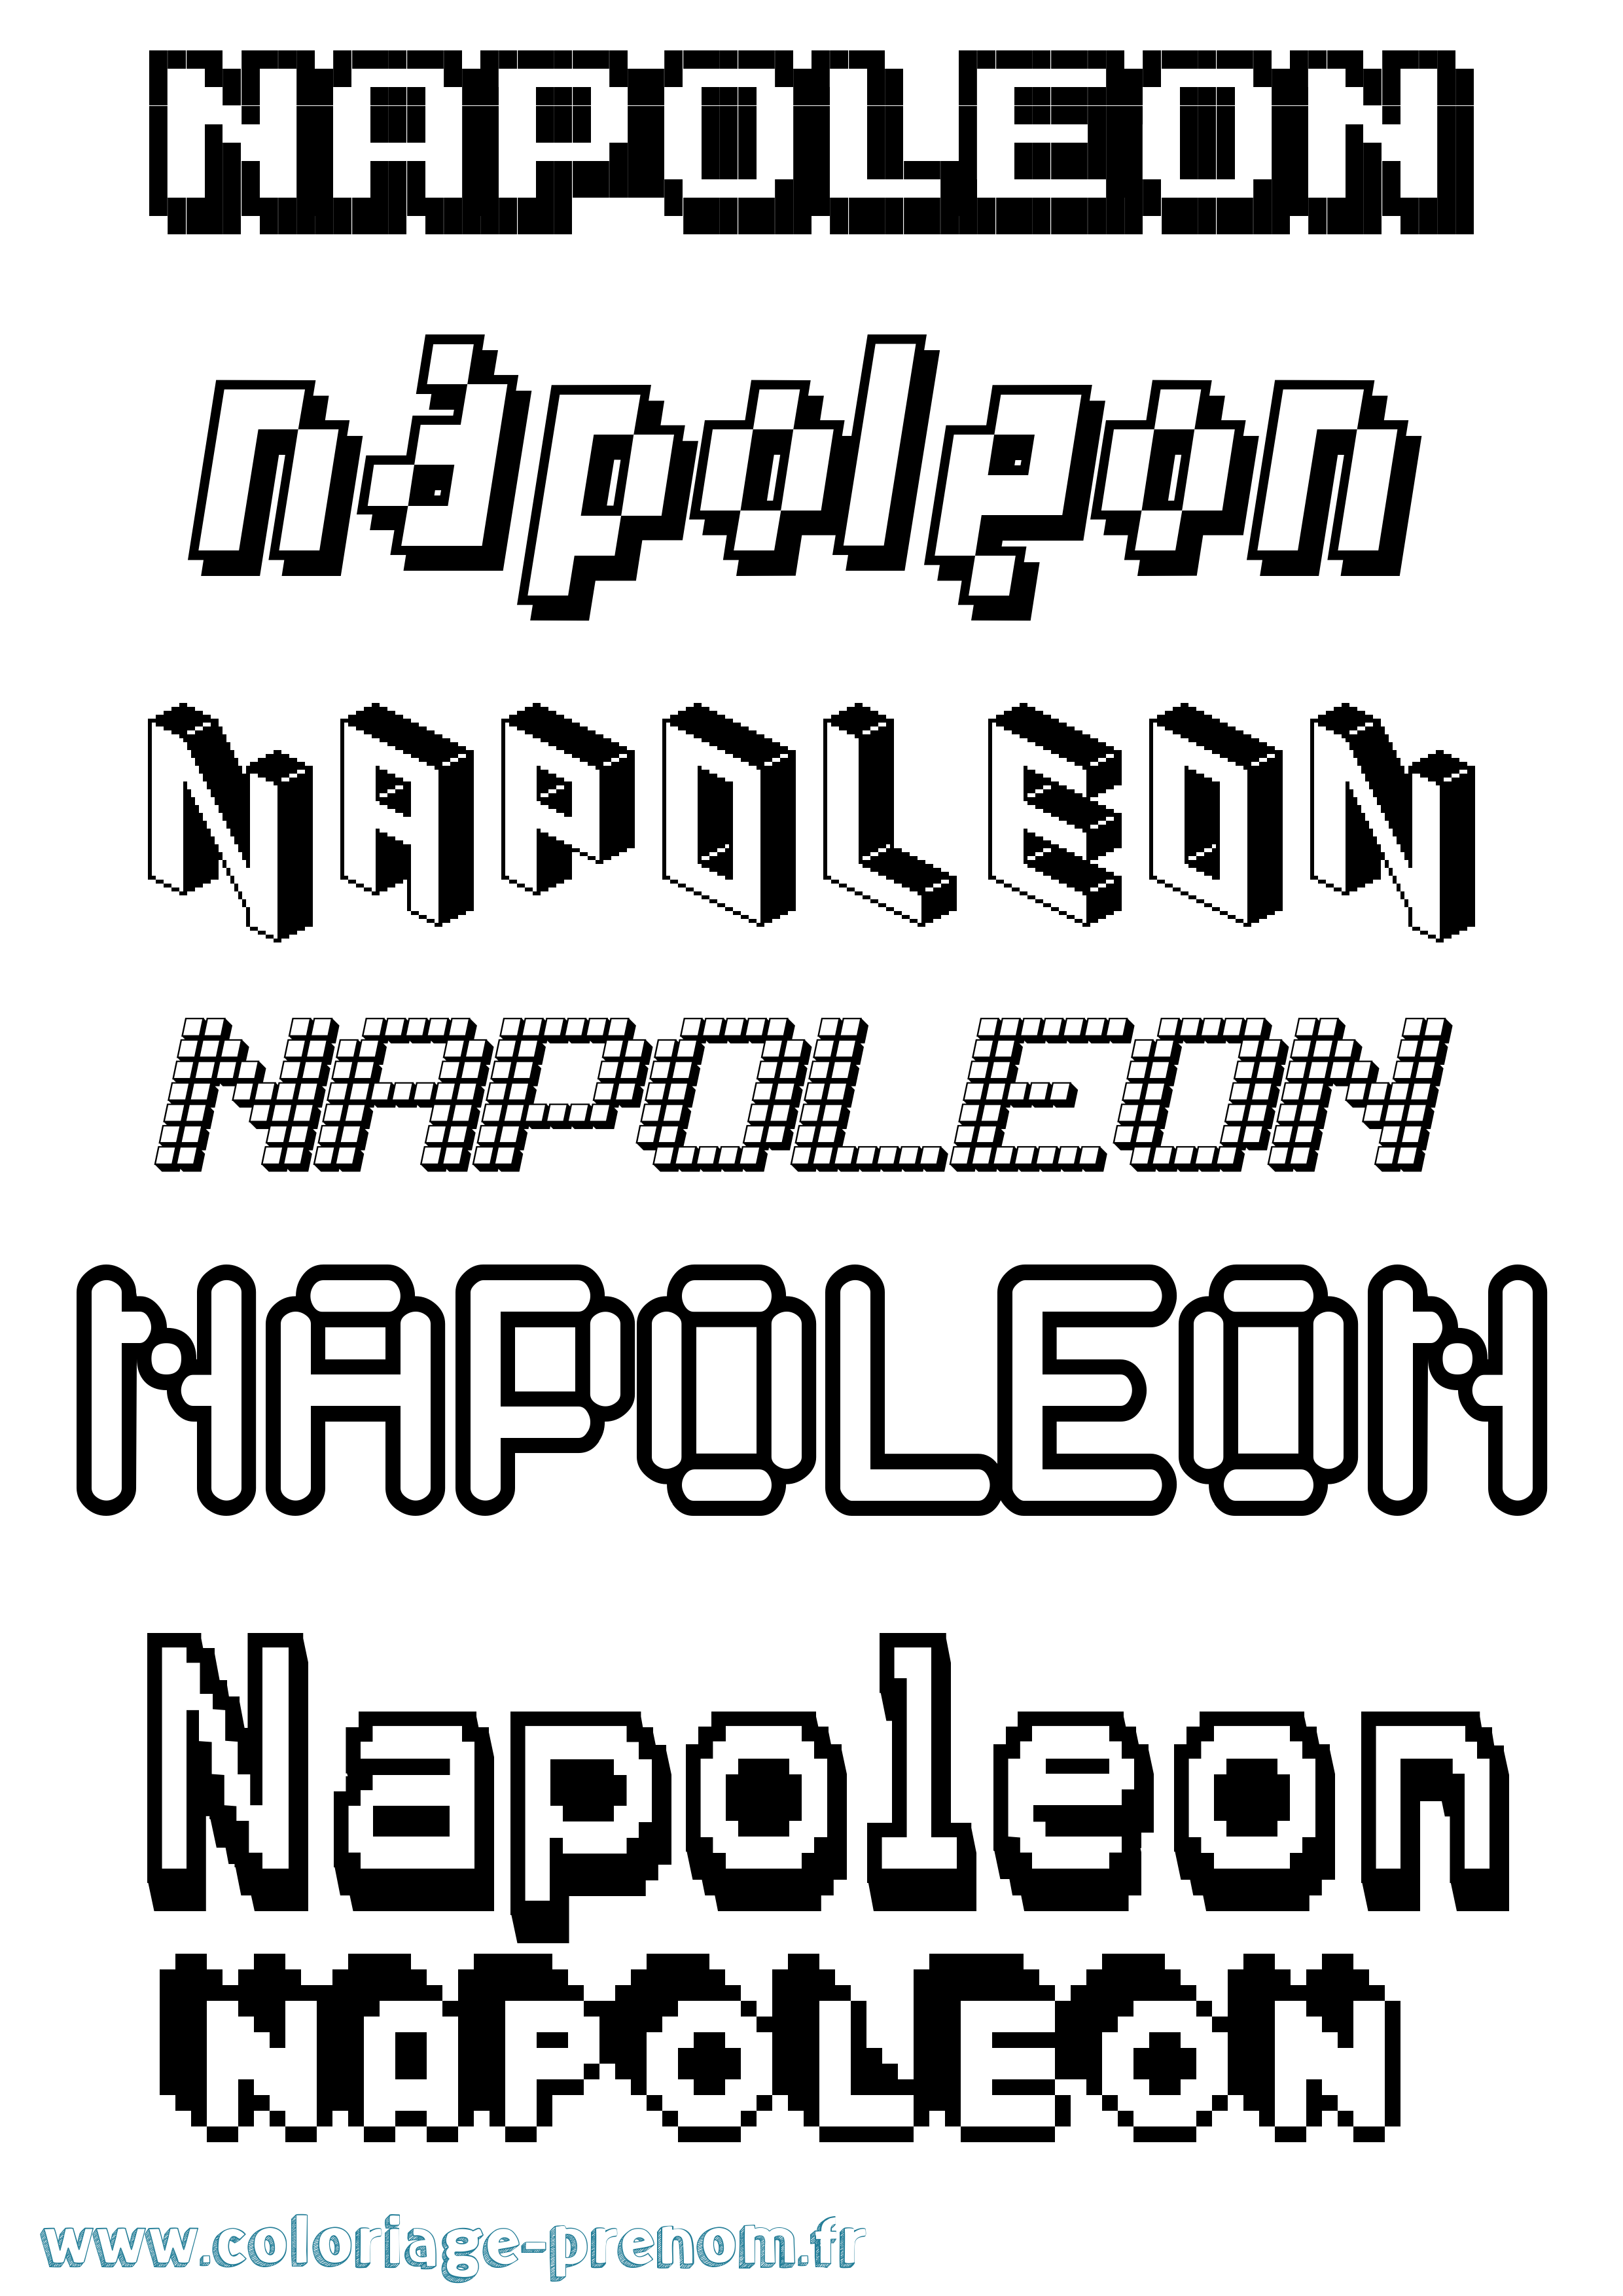 Coloriage prénom Napoleon Pixel